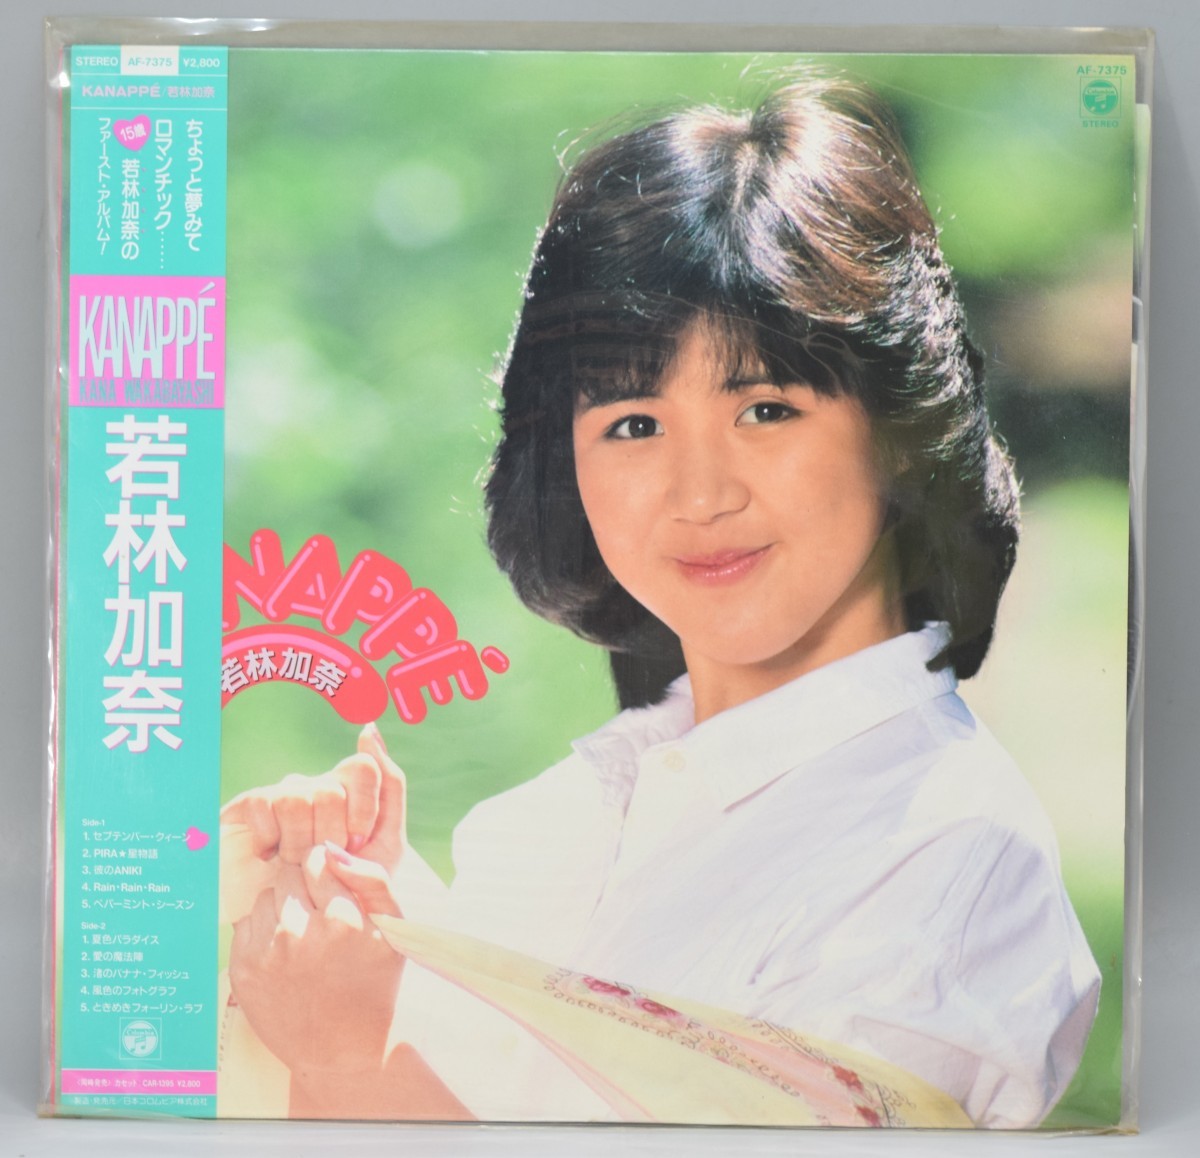  beautiful goods with belt LP record Wakabayashi ..KANAPPE 80\'S idol AF-7375 valuable record 12 -inch COLUMBIA Showa era music You Aku RK-235M/612